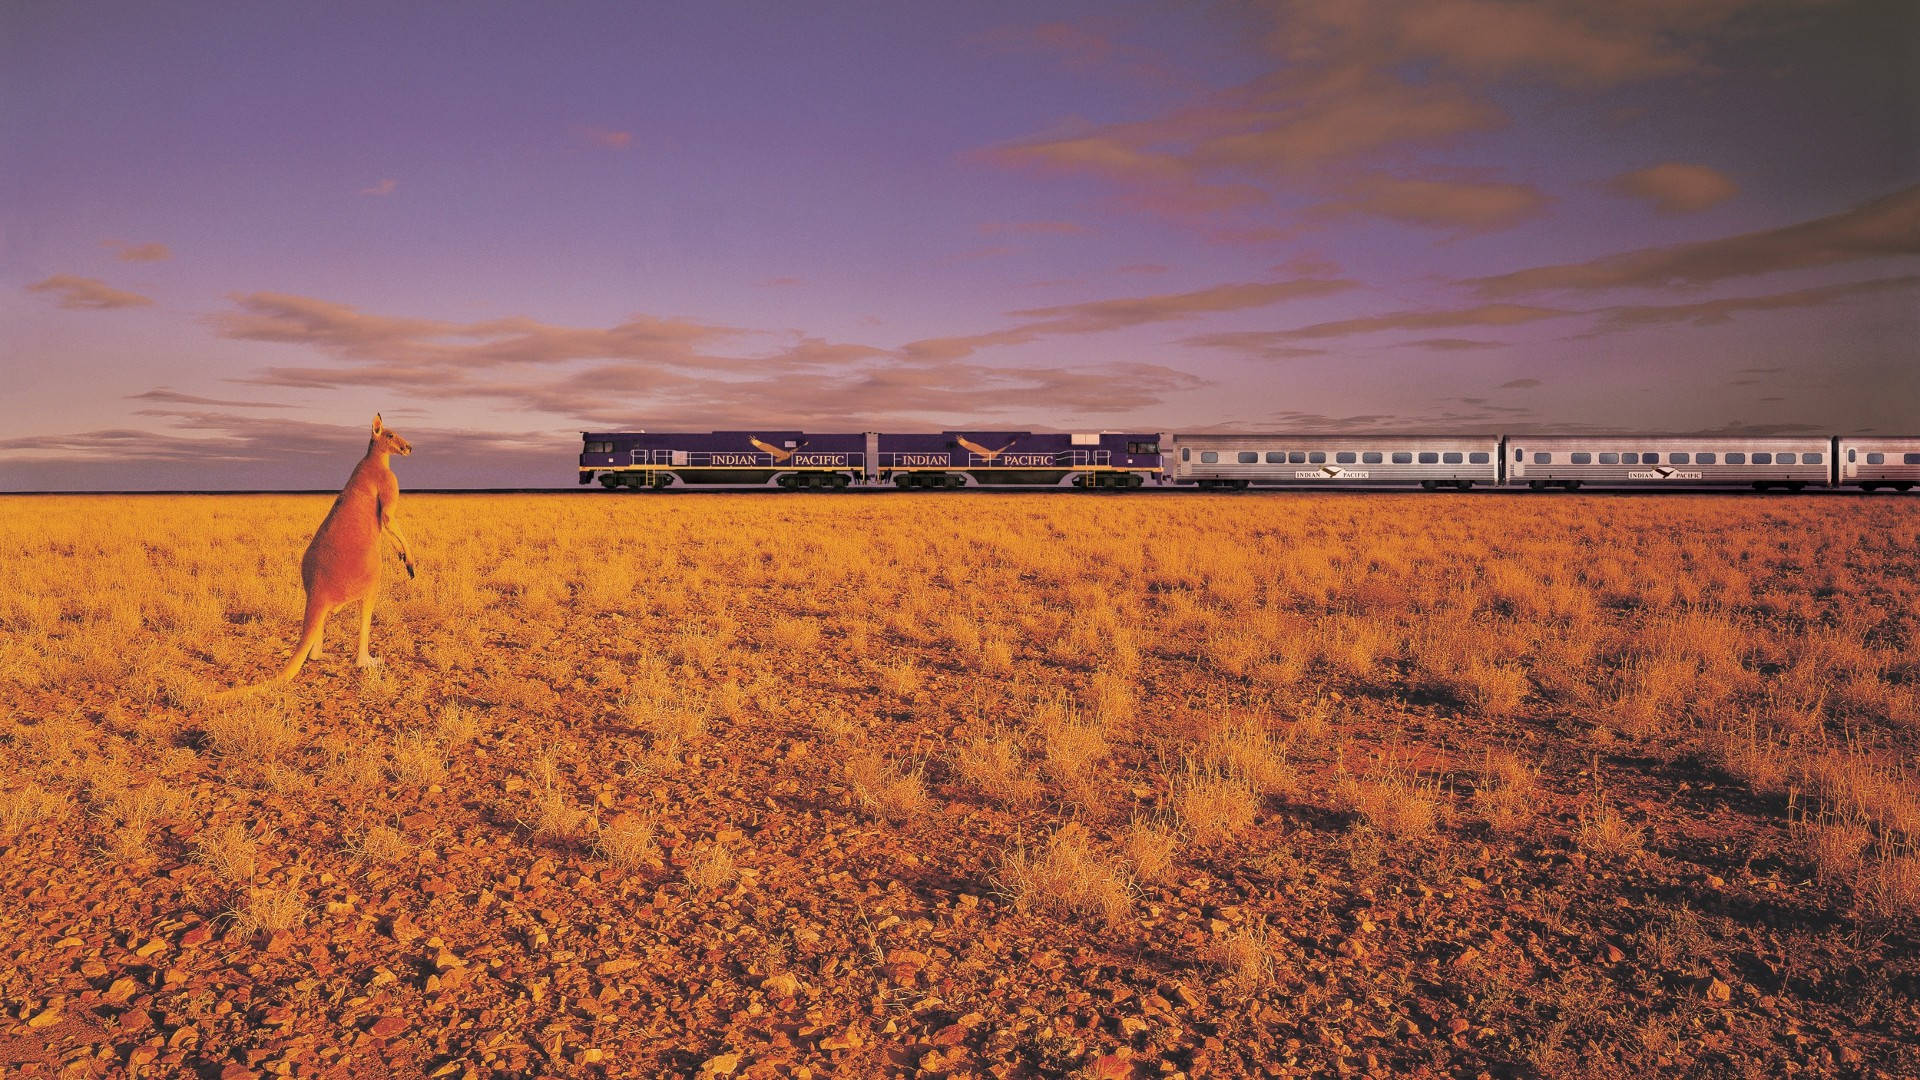 Australischesoutback - Great Southern Rail Wallpaper